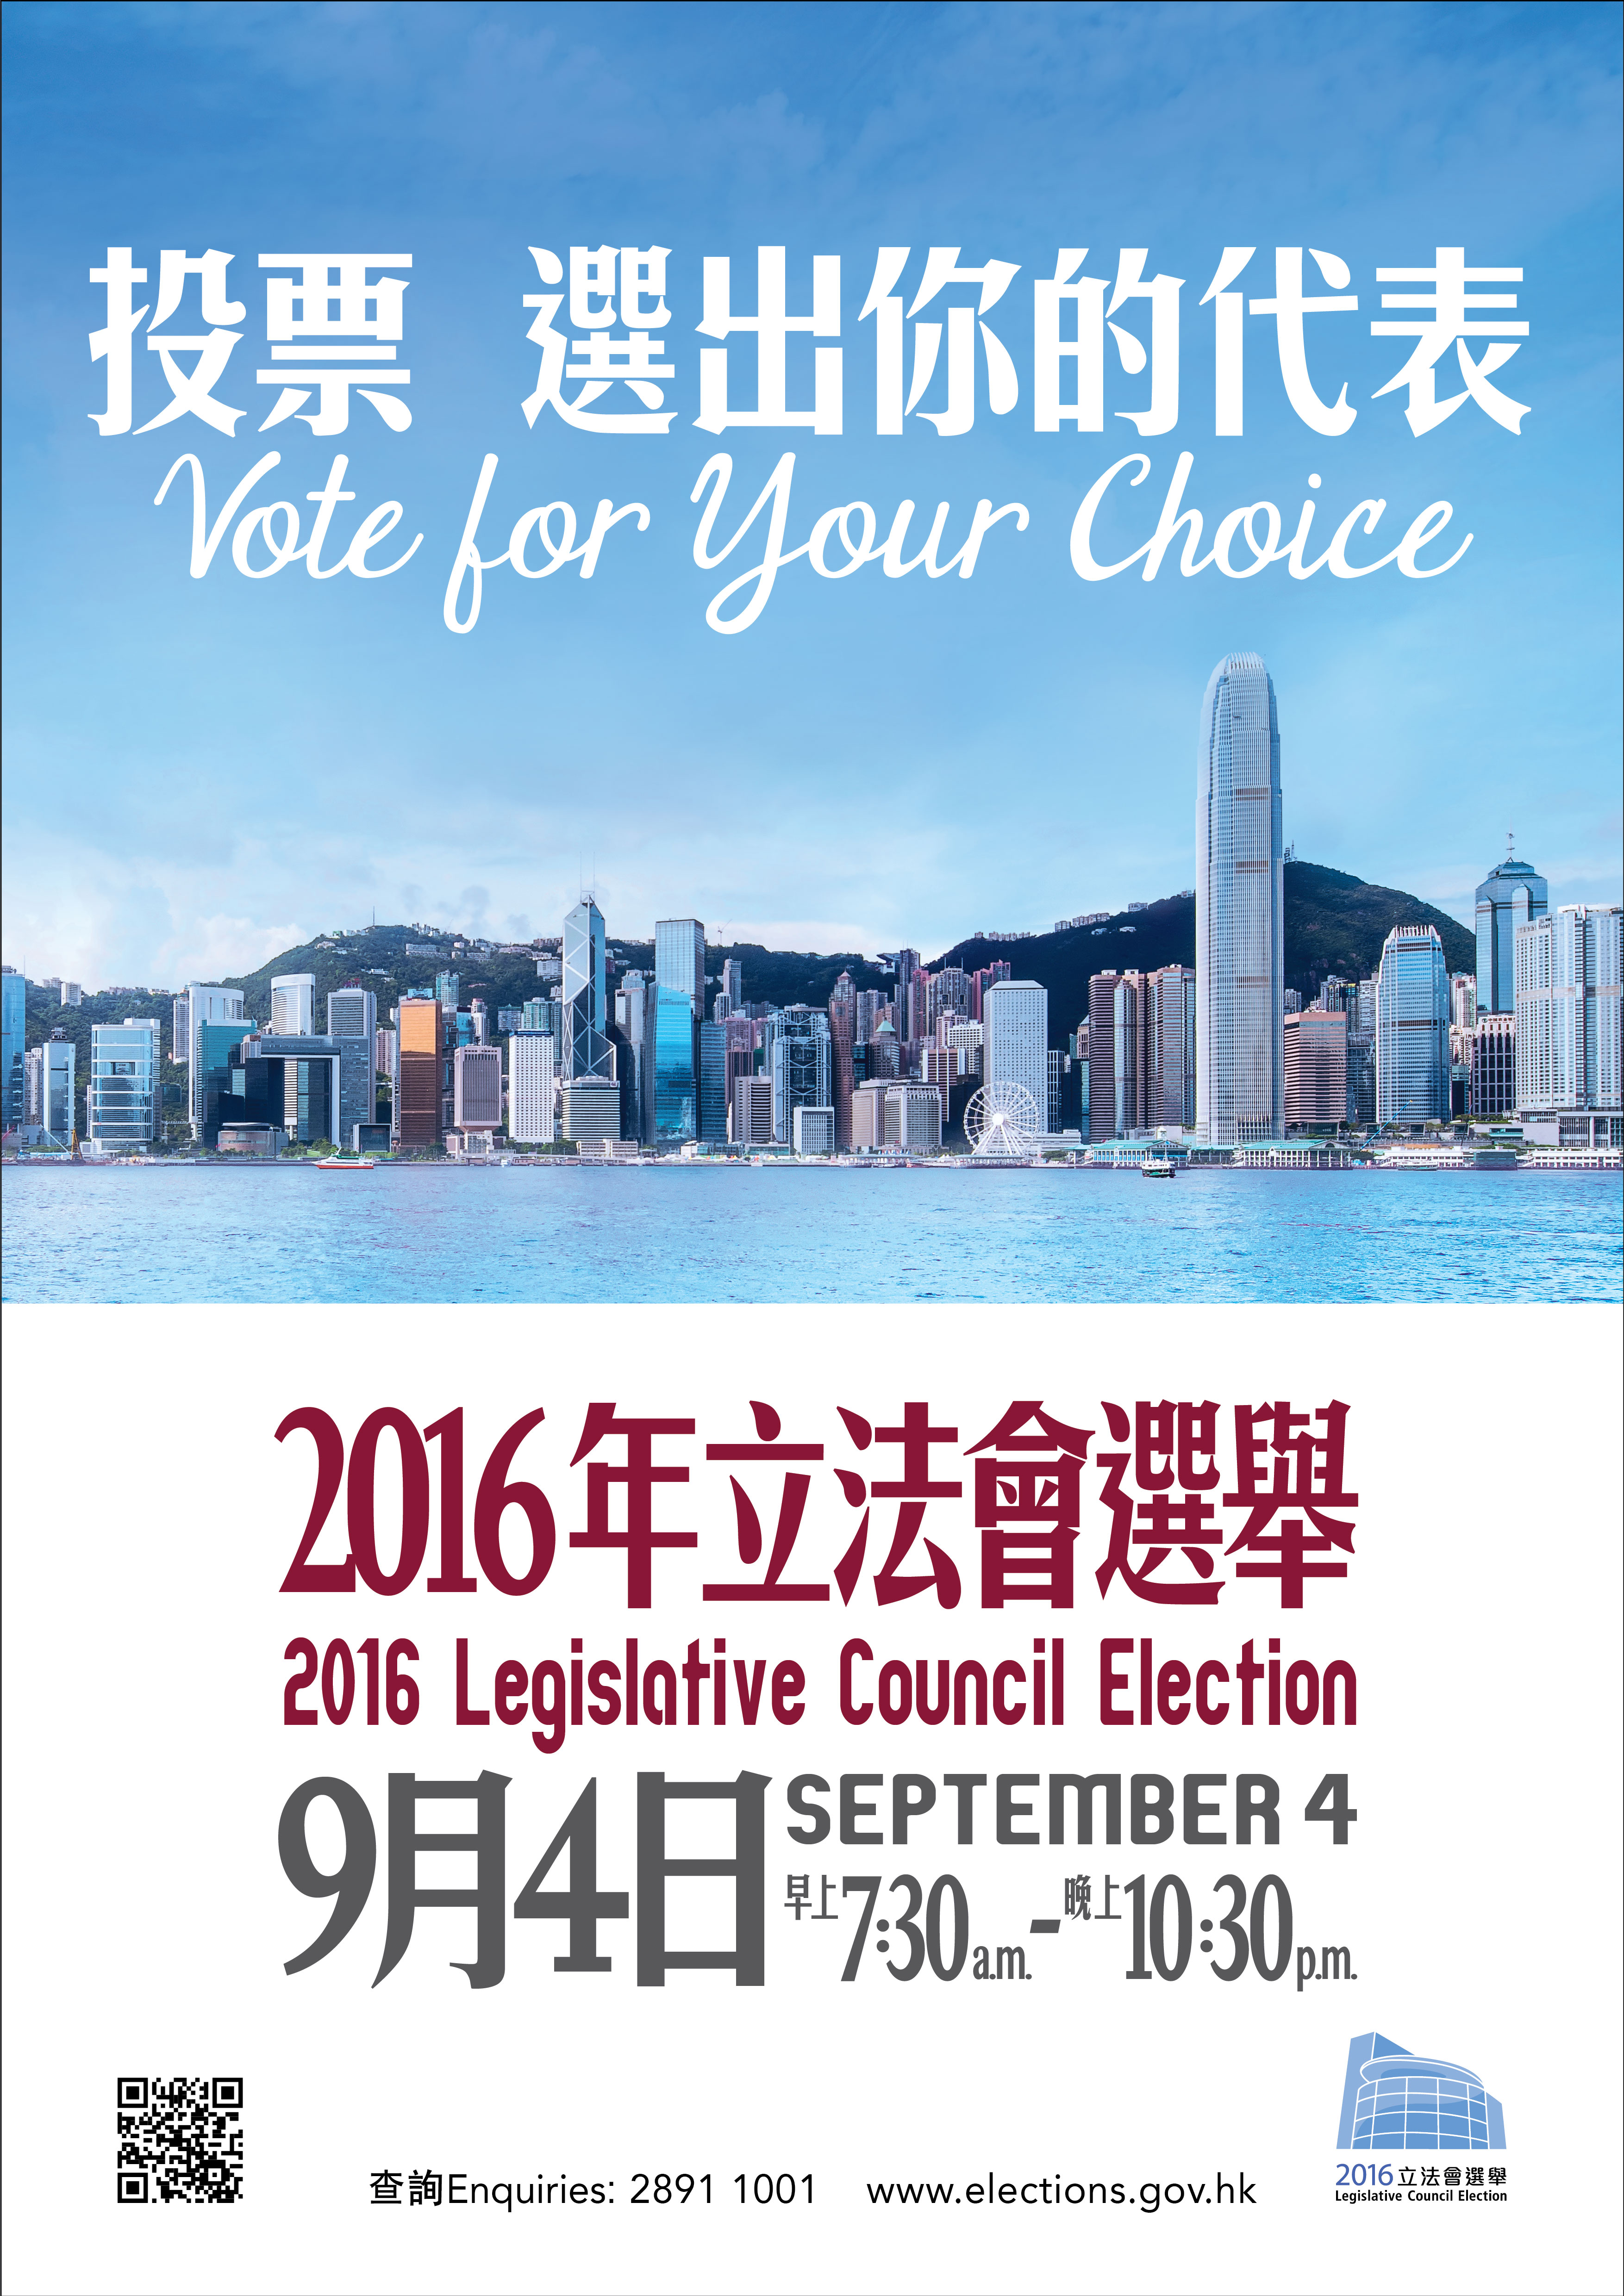 Poster on 2016 Legislative Council Election